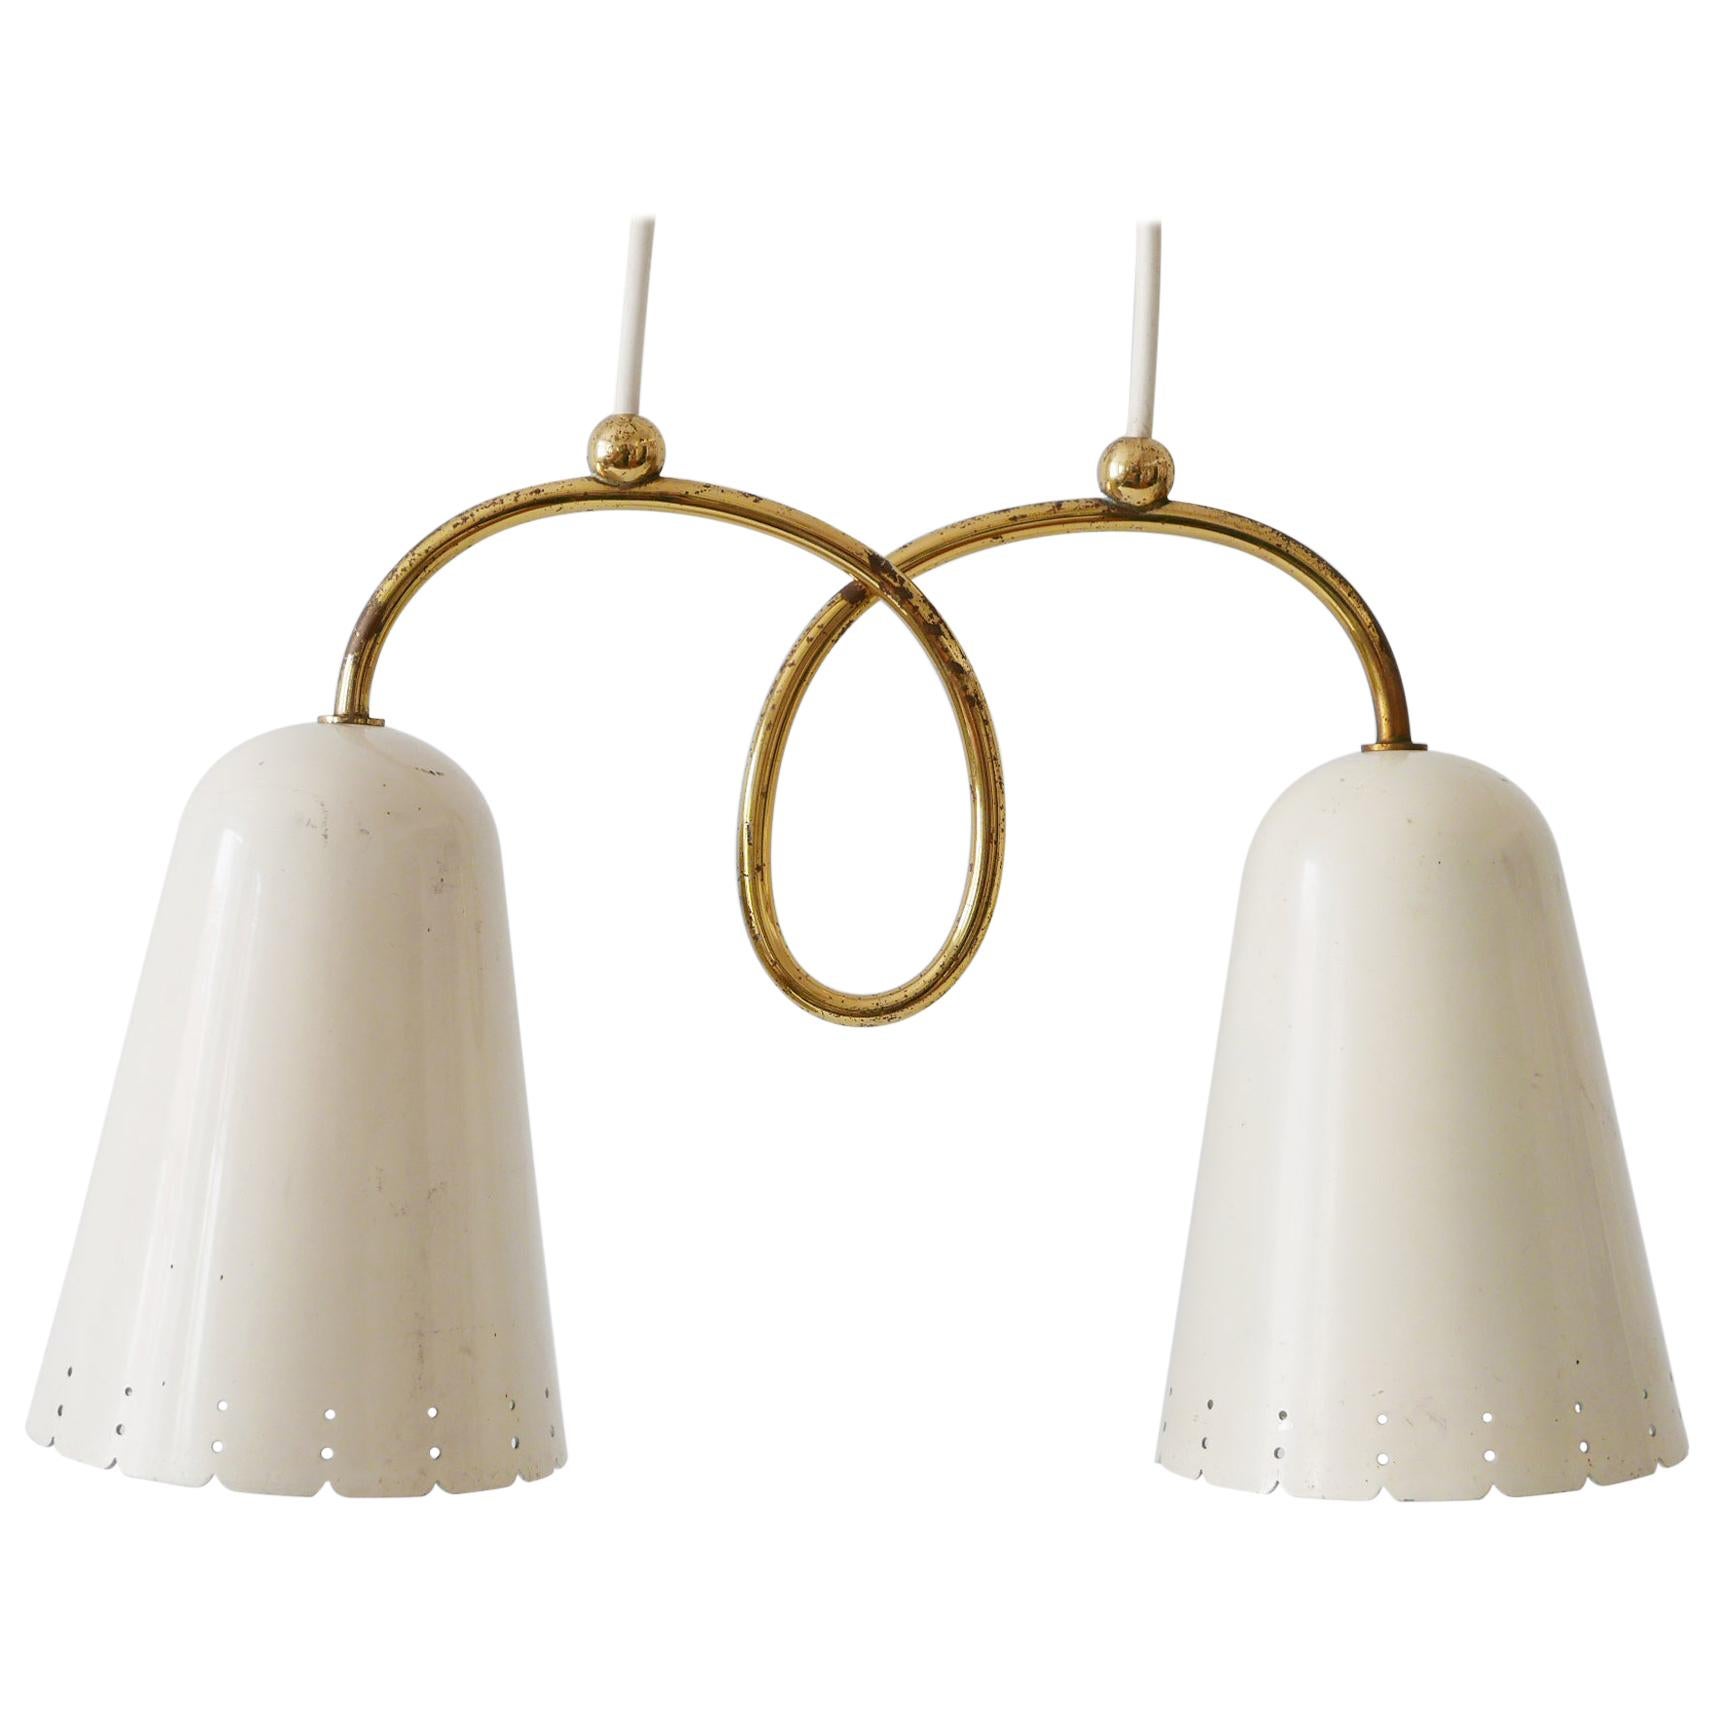 Rare Mid-Century Modern Double Head Pendant Lamp or Hanging Light 1950s, Germany